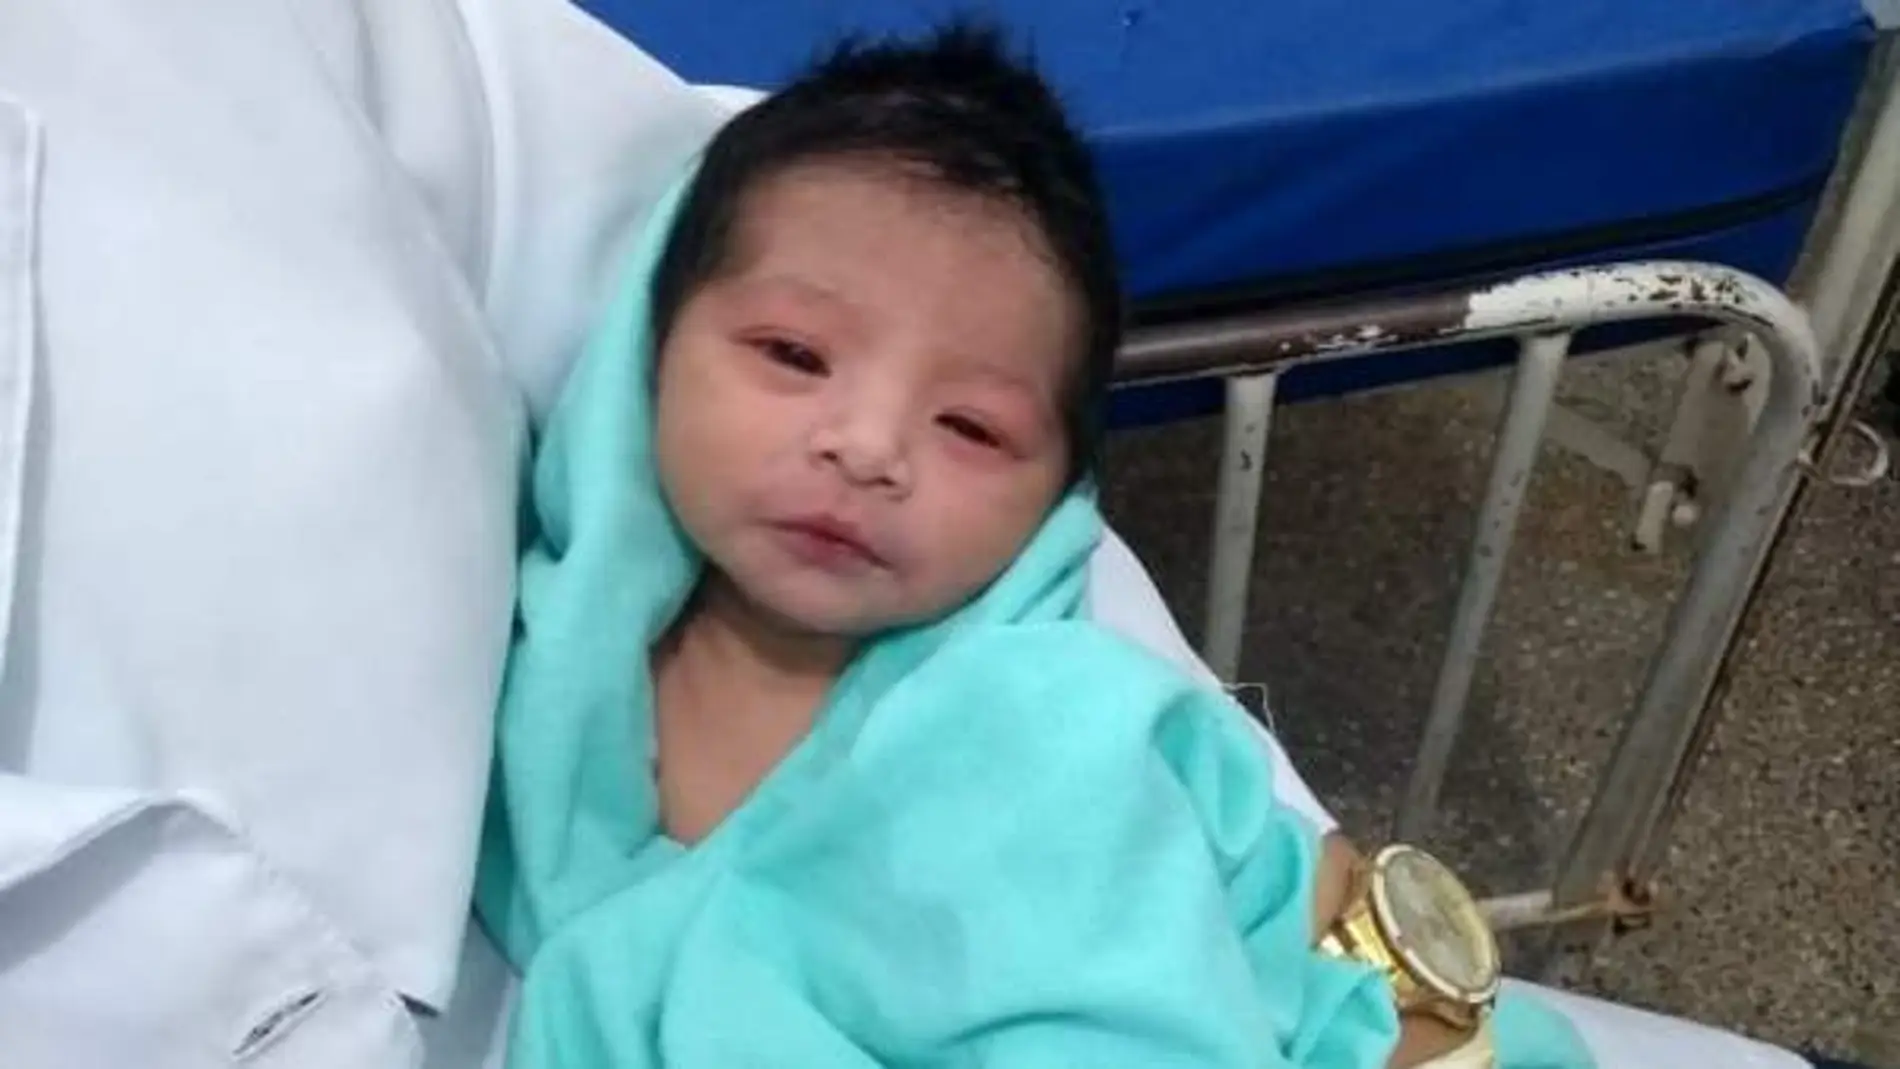 La bebé rescatada tras ser enterrada viva en Brasil